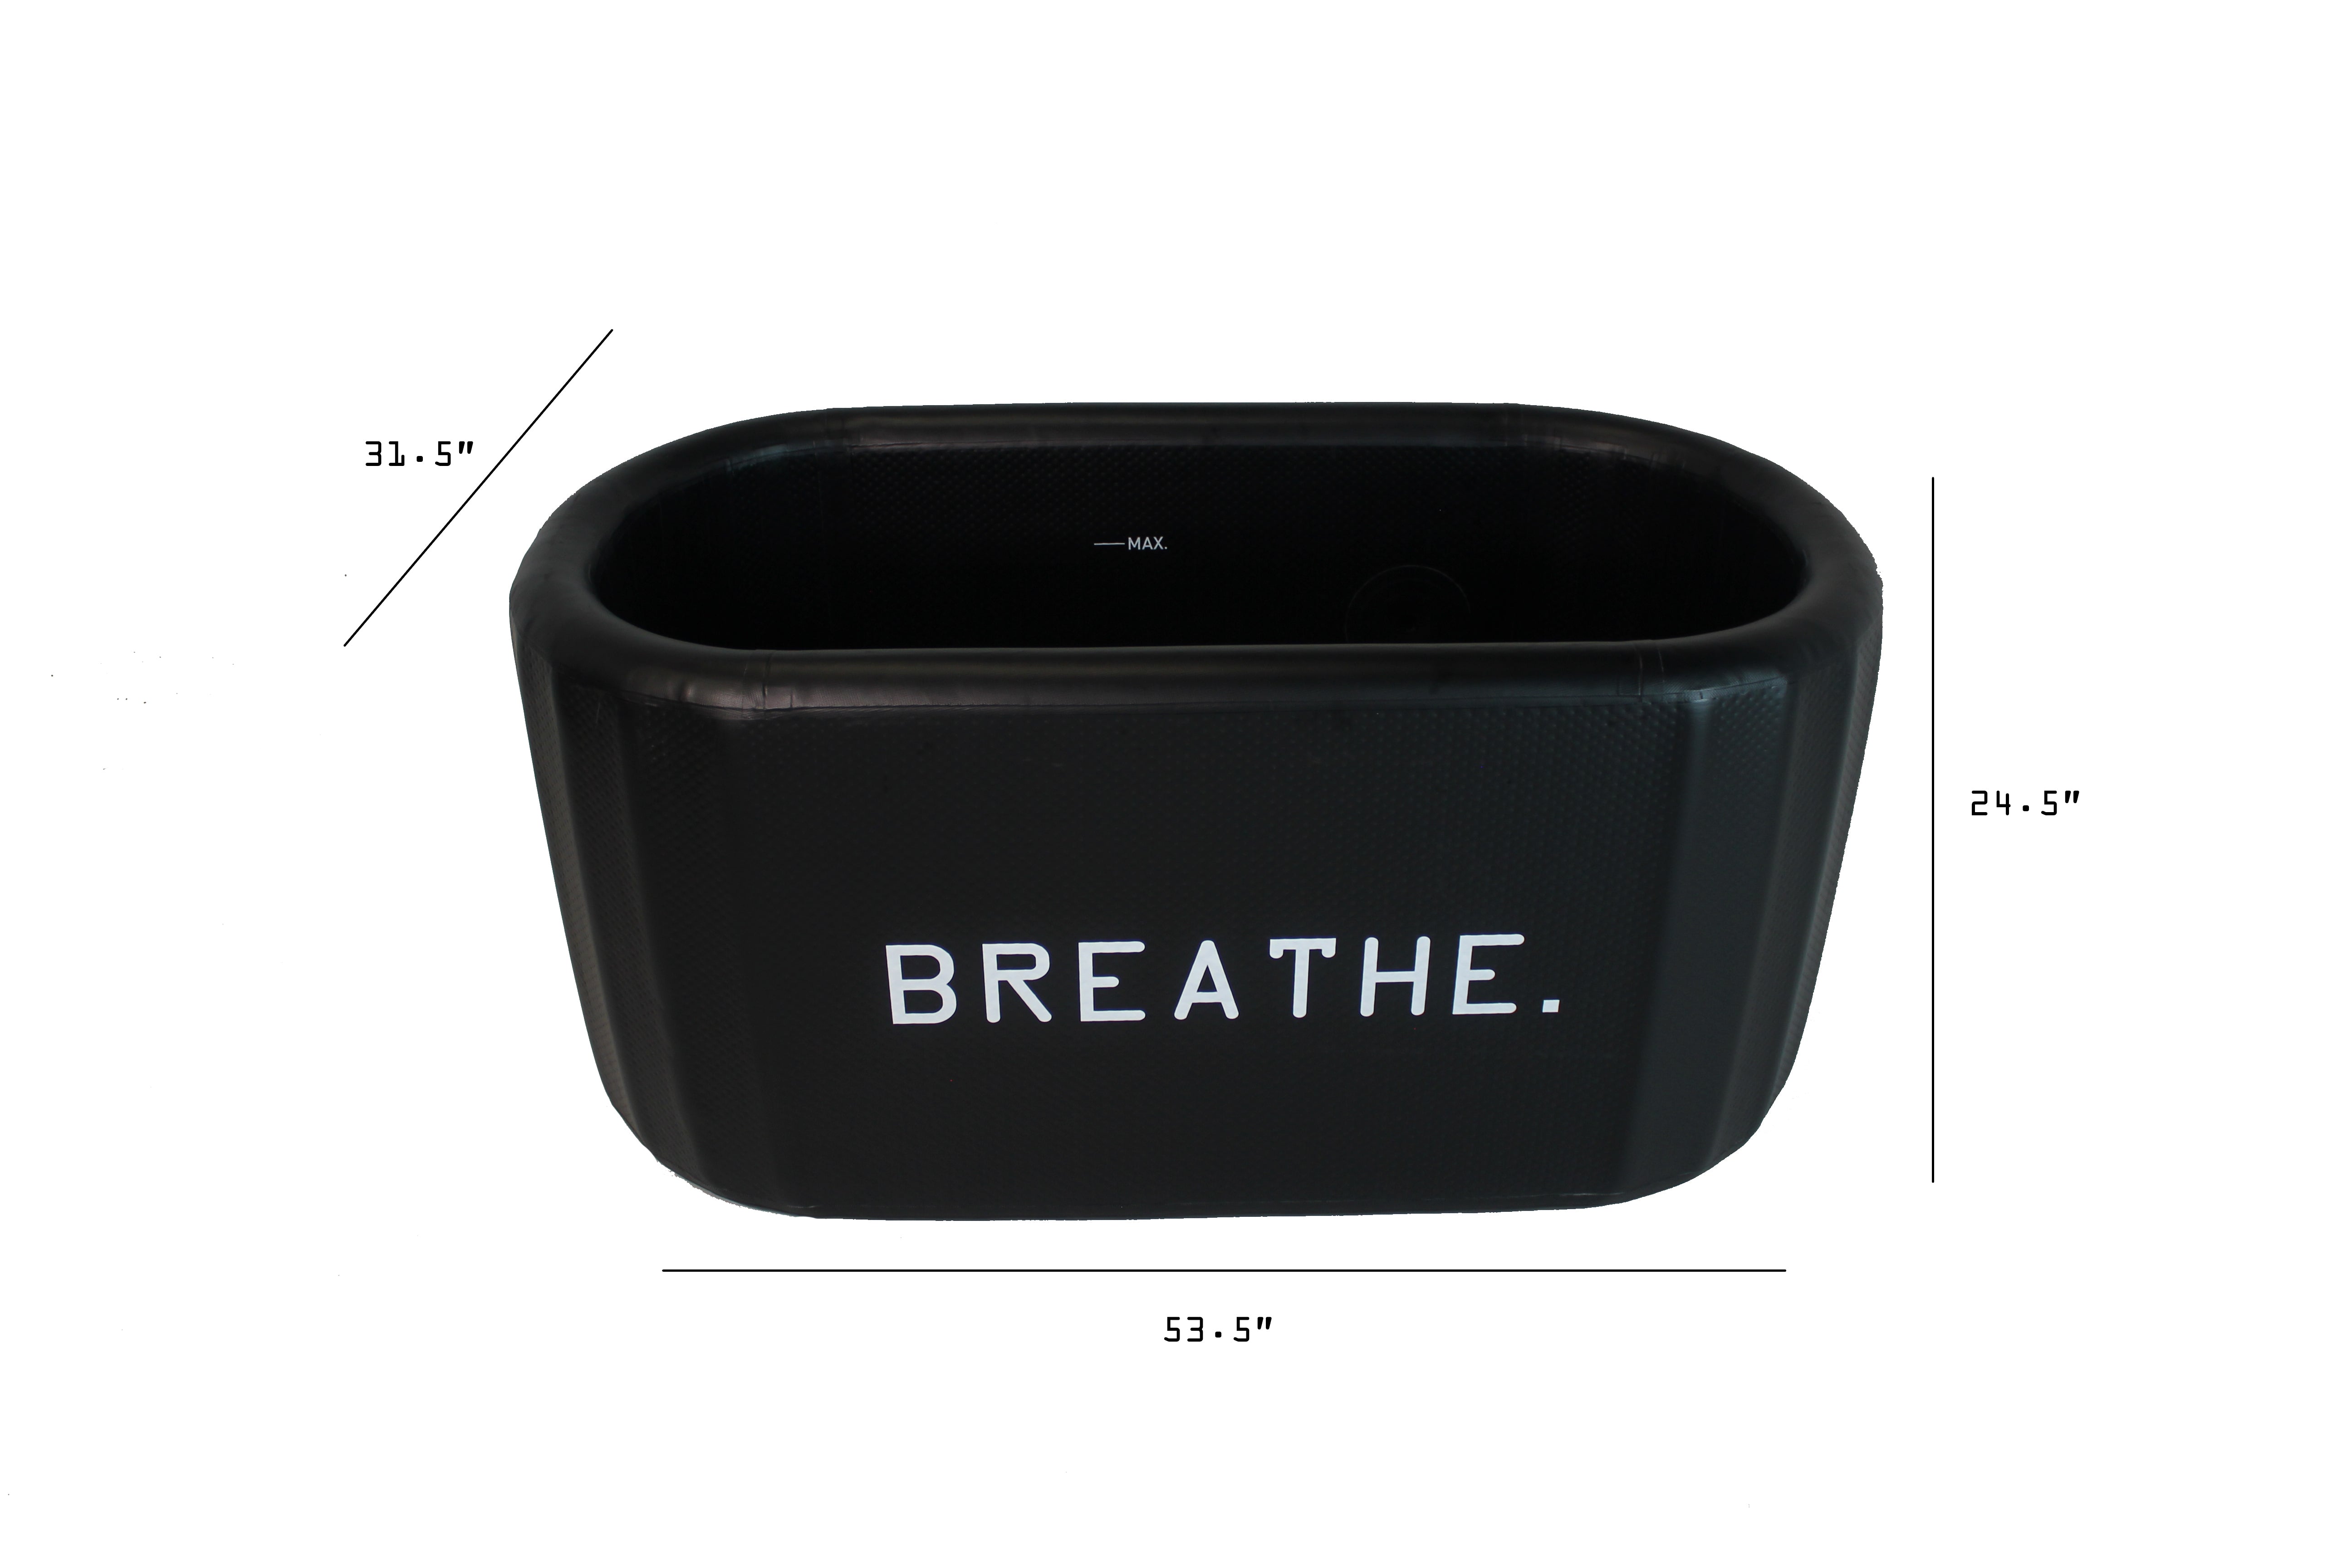 The Breathe Pod